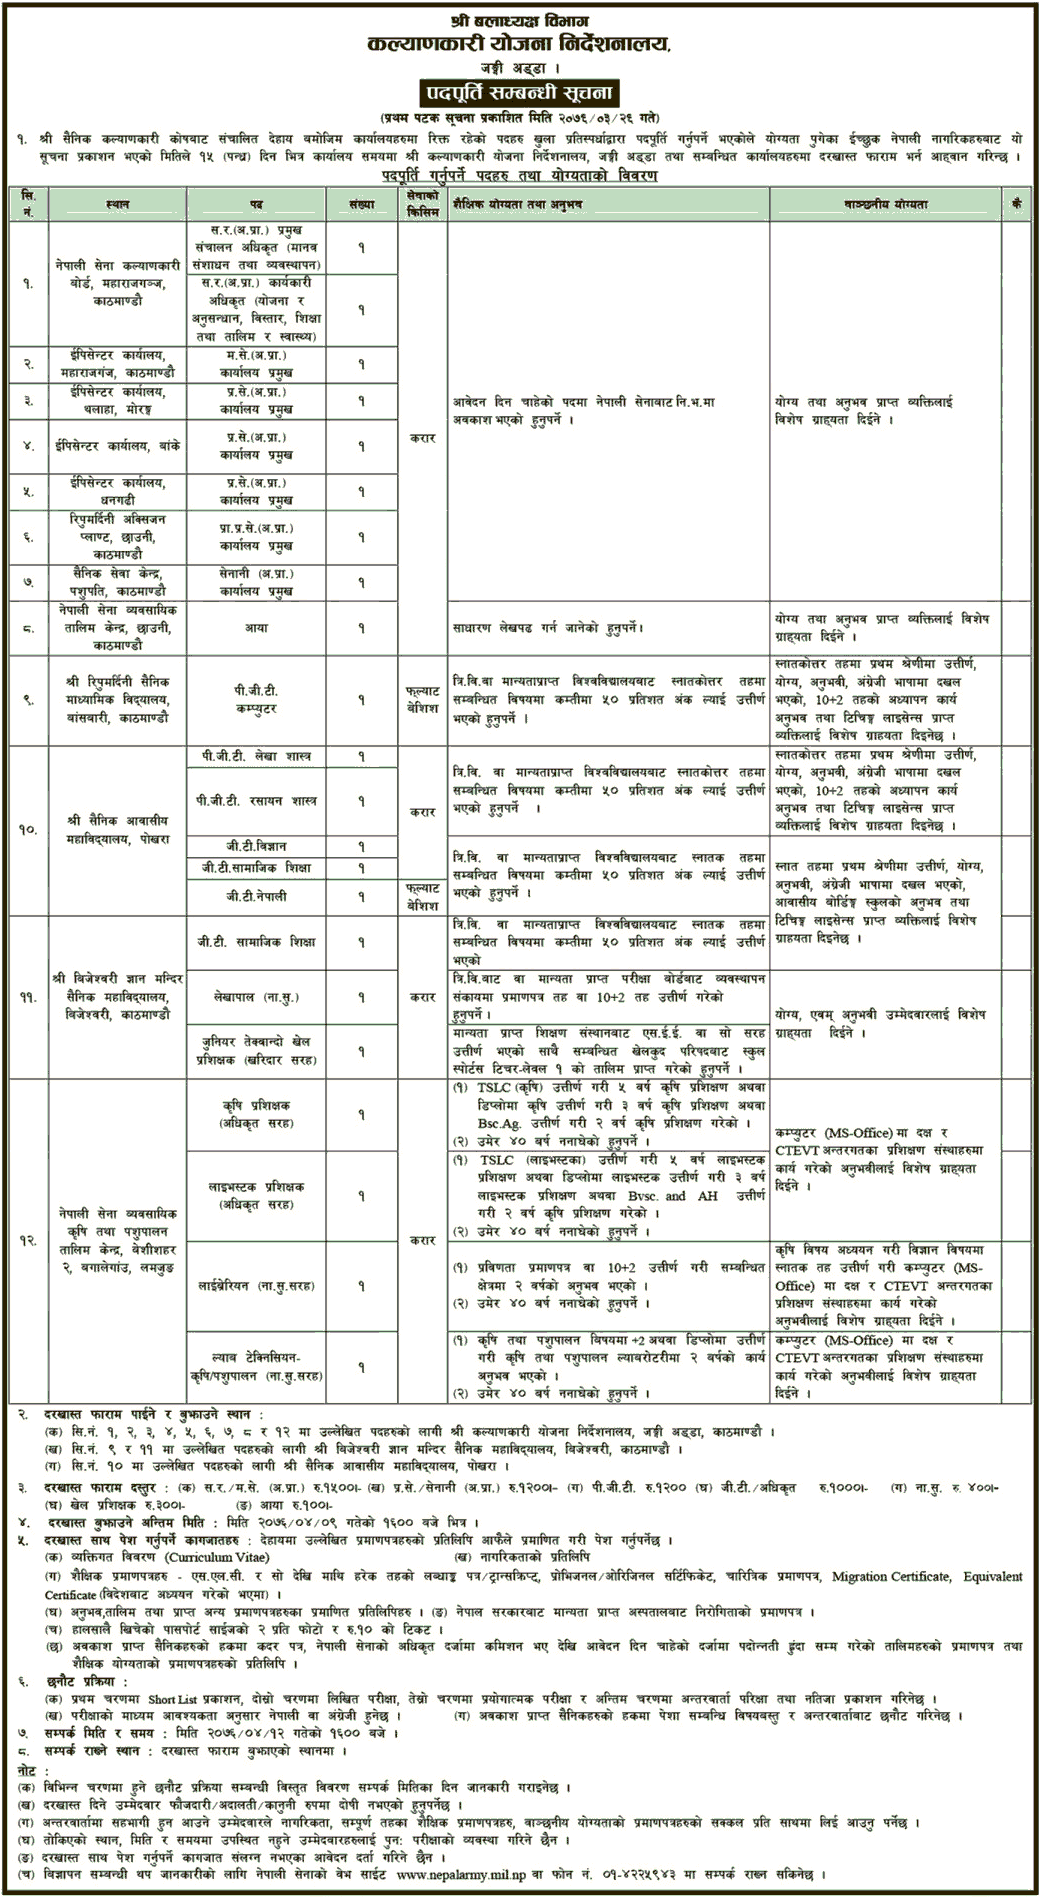 Nepal Army Welfare Directorate Job Vacancy Notice